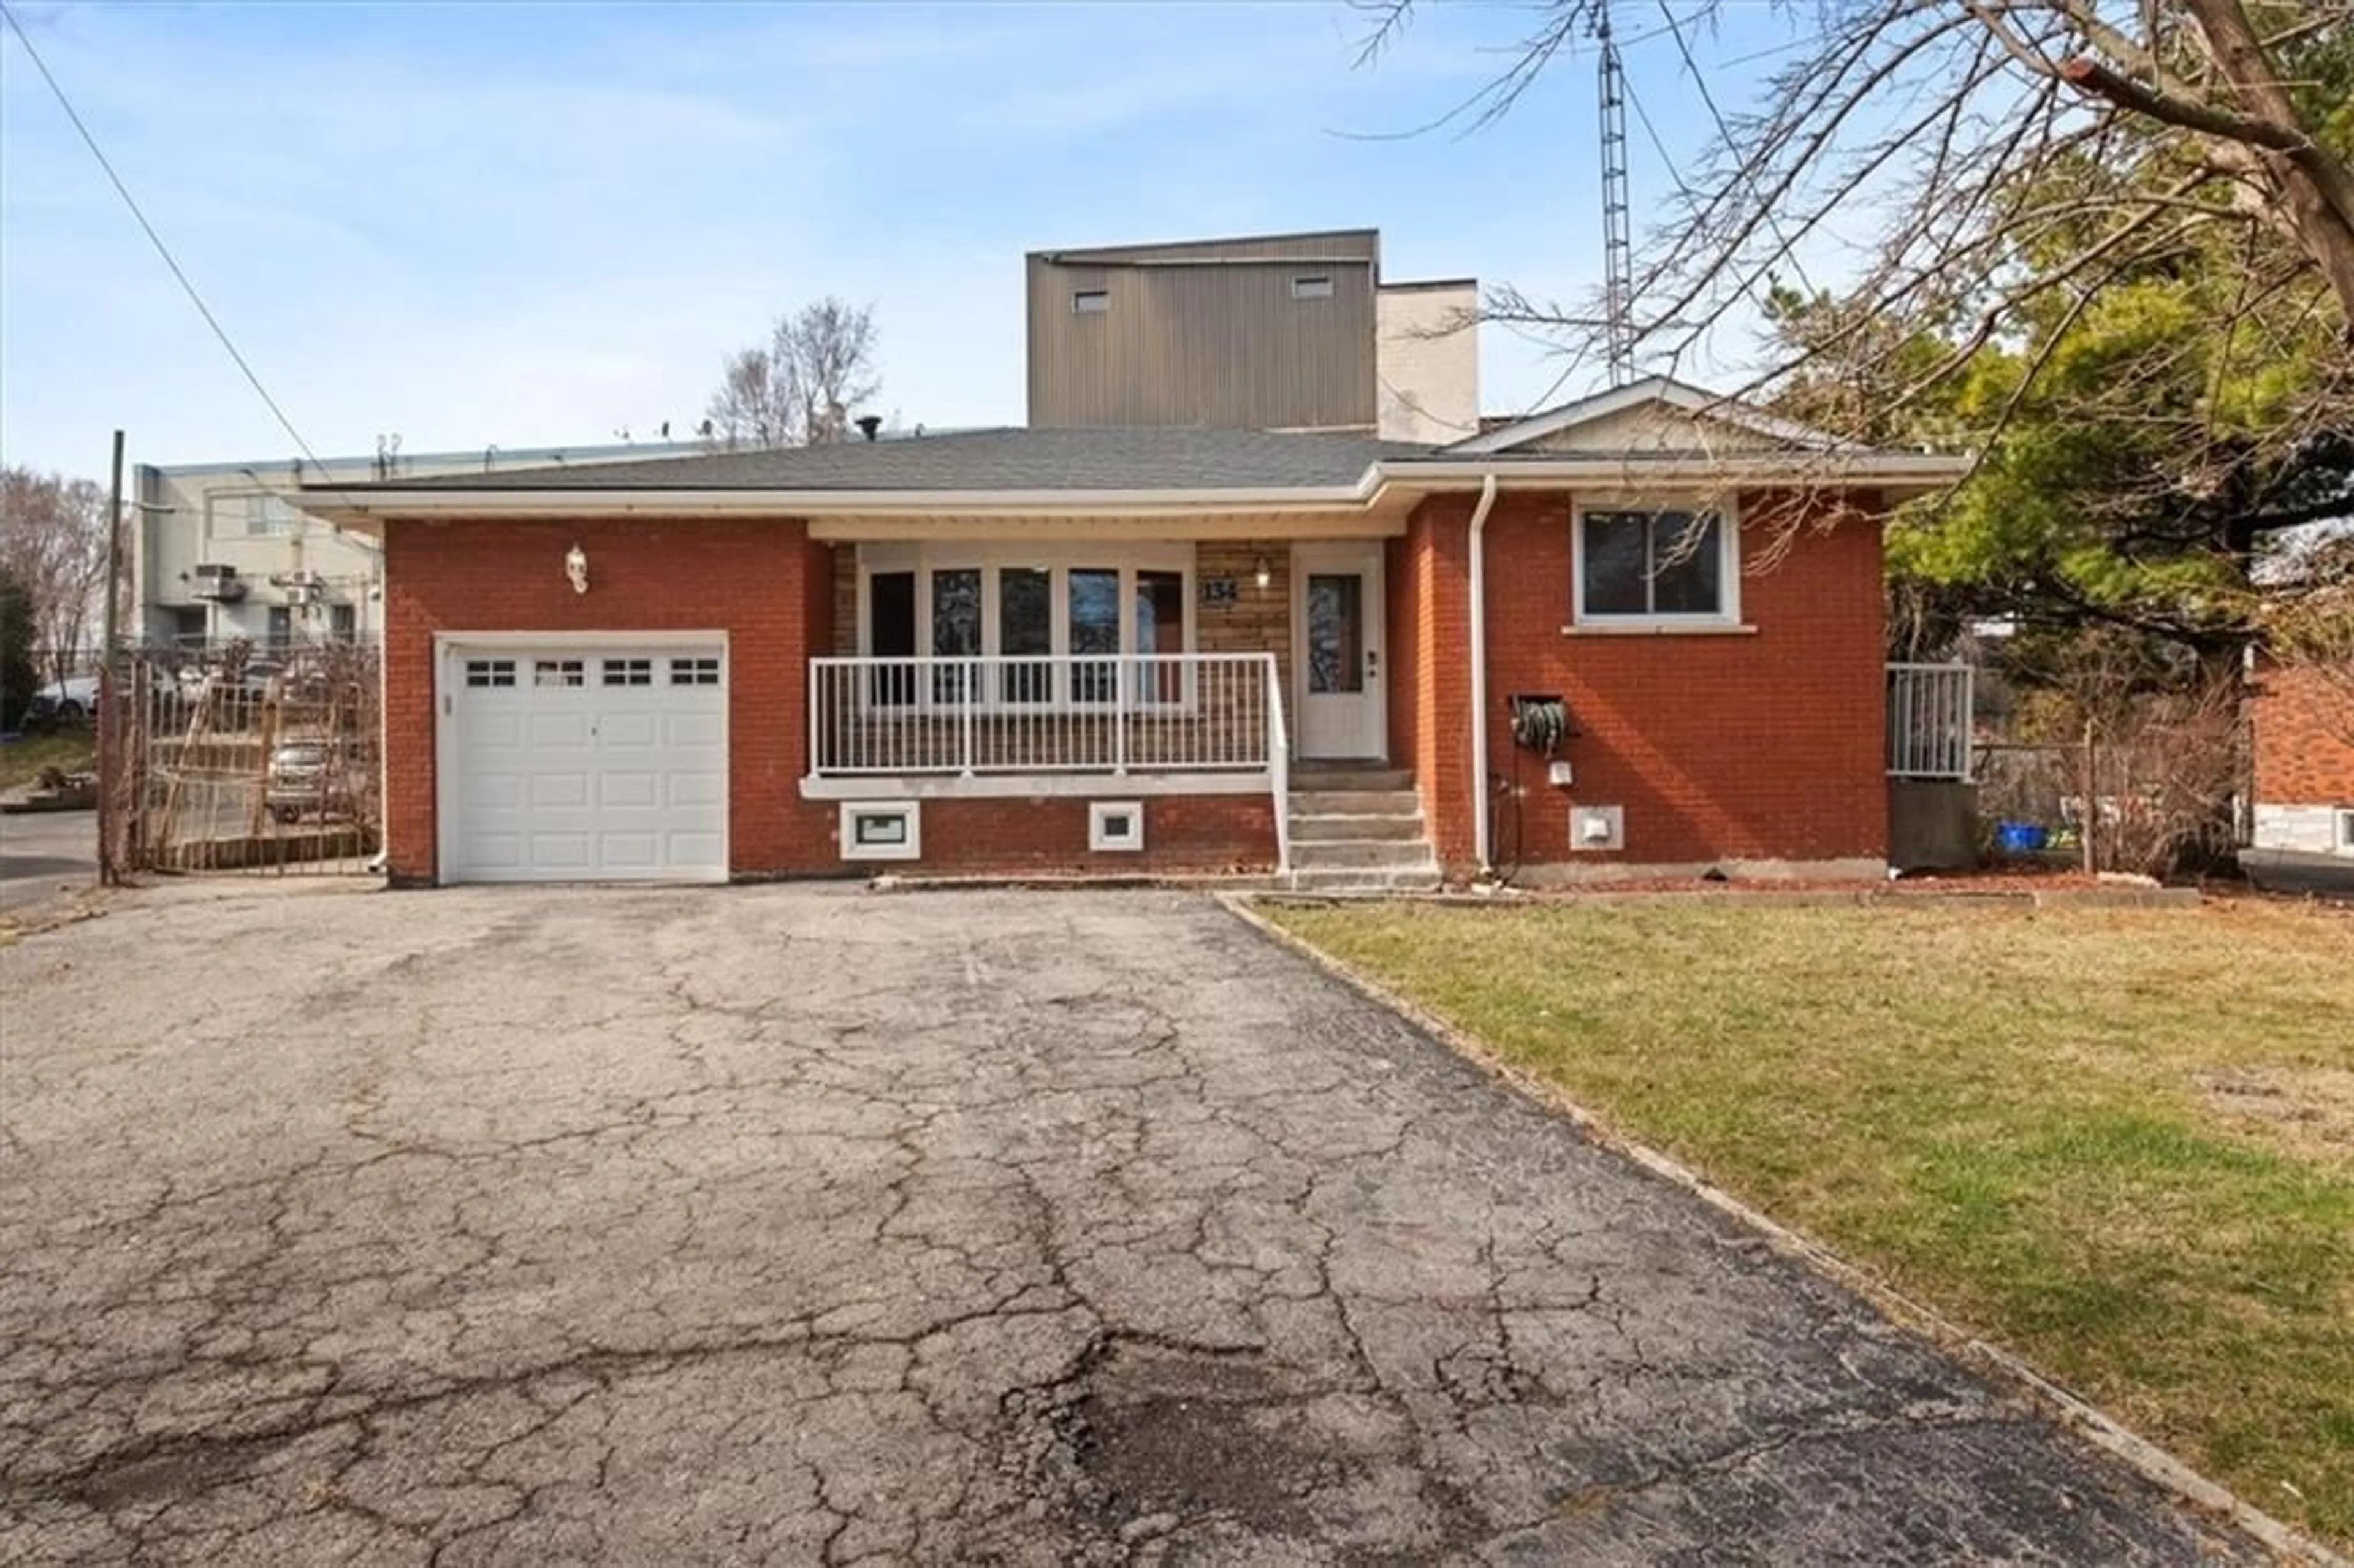 Home with brick exterior material for 134 Victor Blvd, Hamilton Ontario L9A 2V4